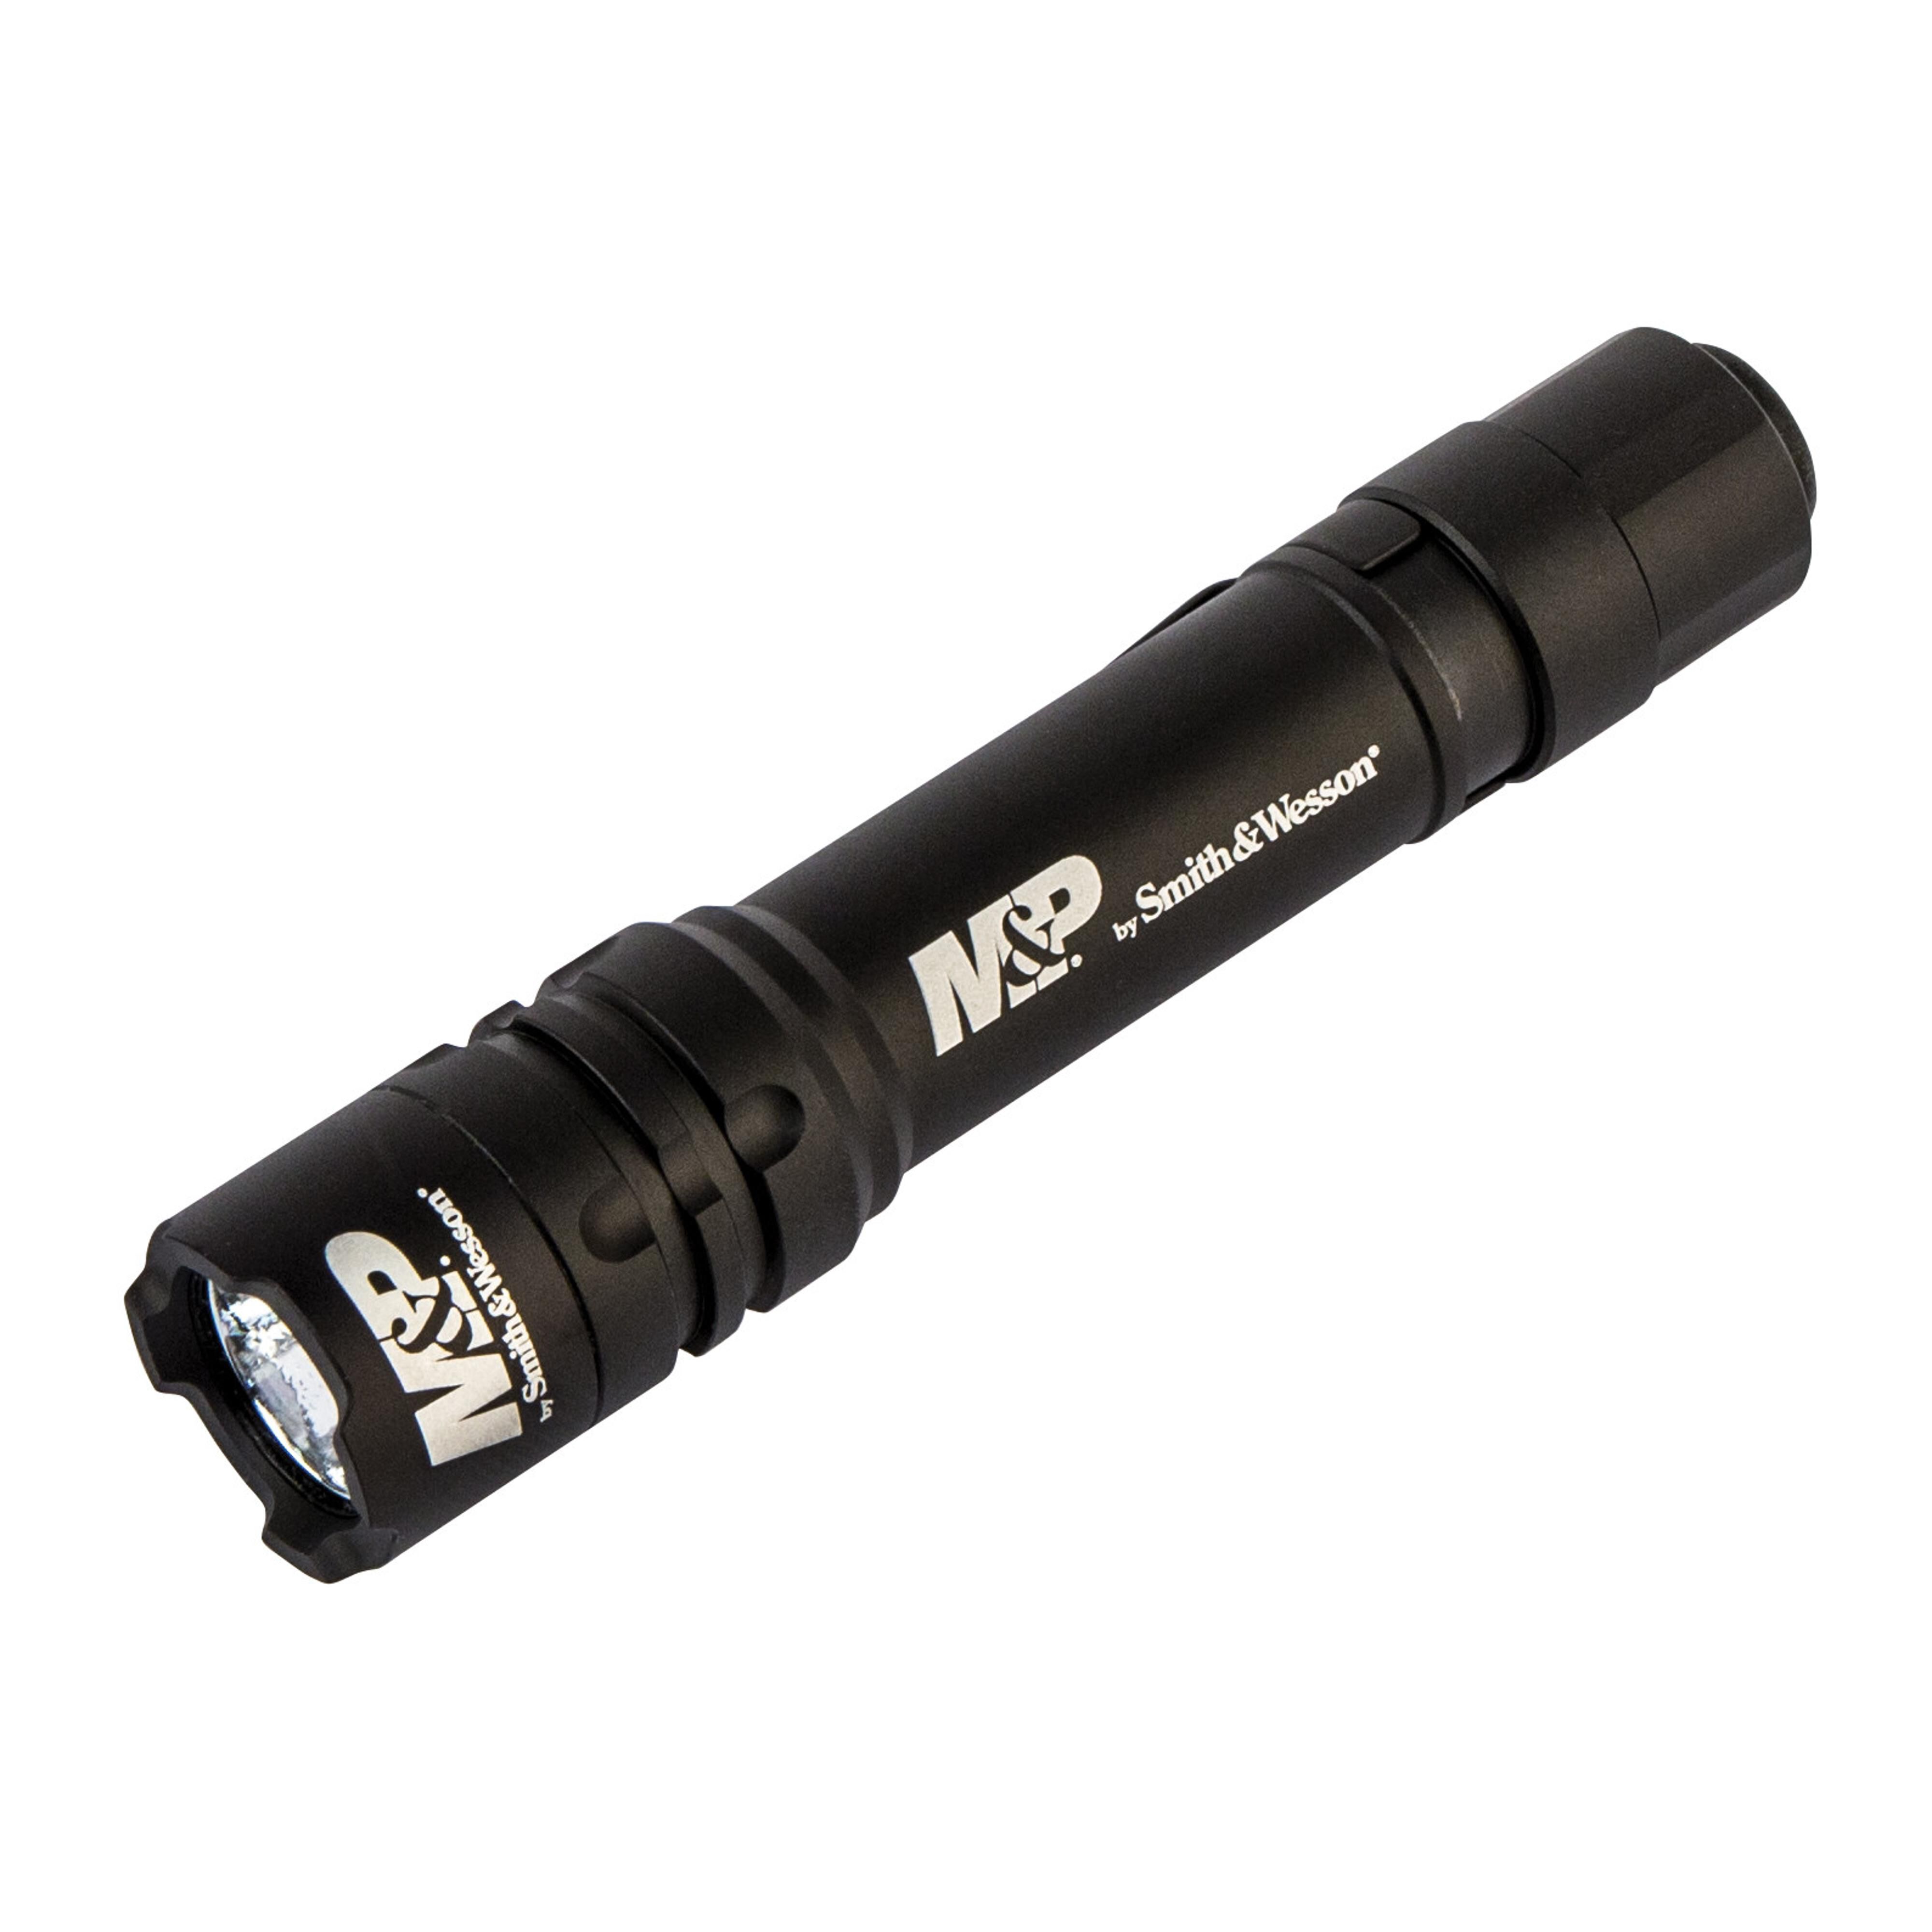 Smith & Wesson Galaxy Ray Personal LED Flashlight 110200 